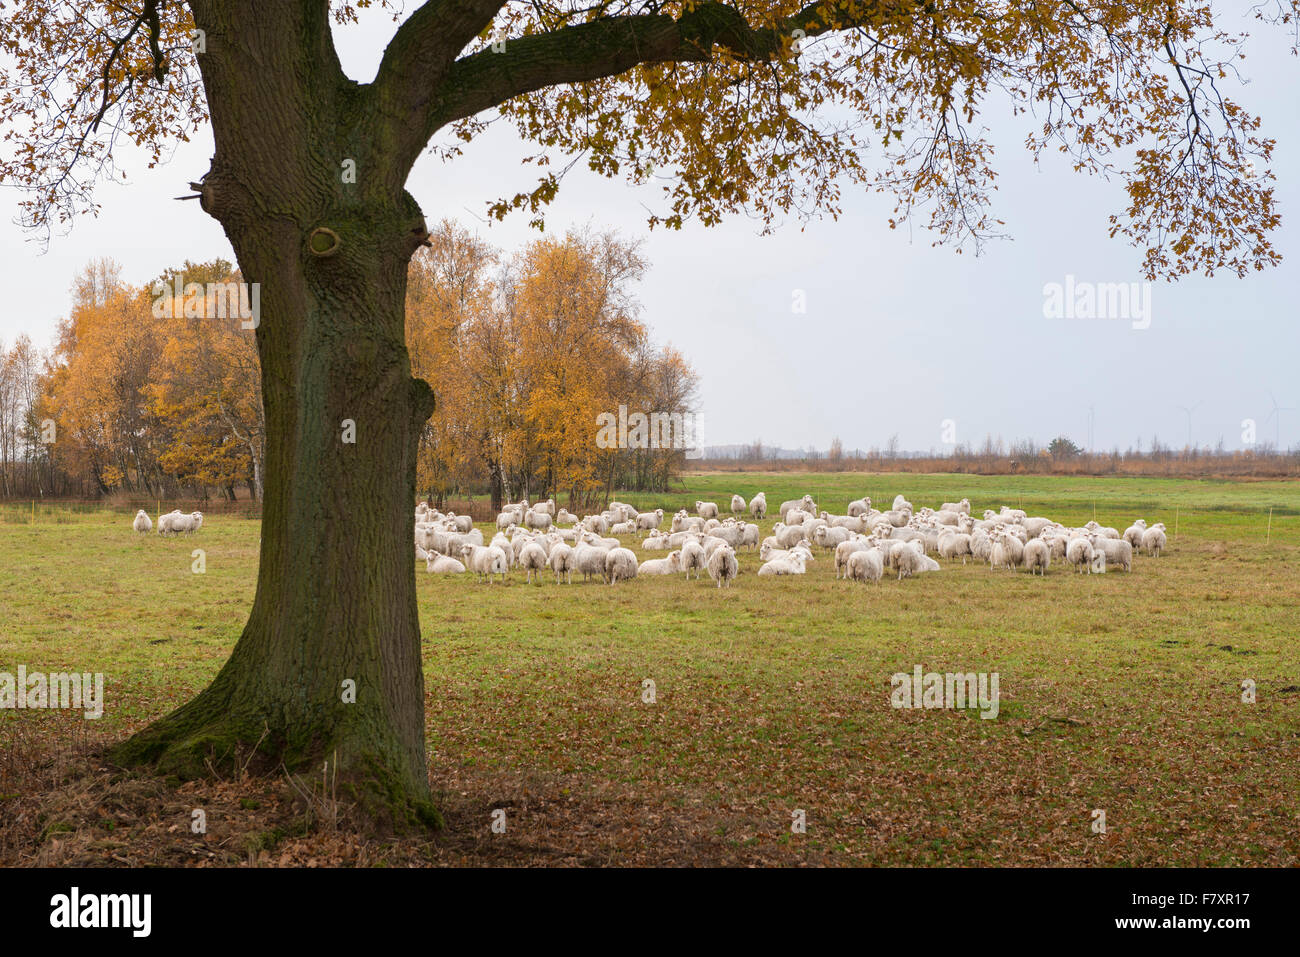 flock of sheep at rehdener geestmoor, oldenburger münsterland, niedersachsen, germany Stock Photo